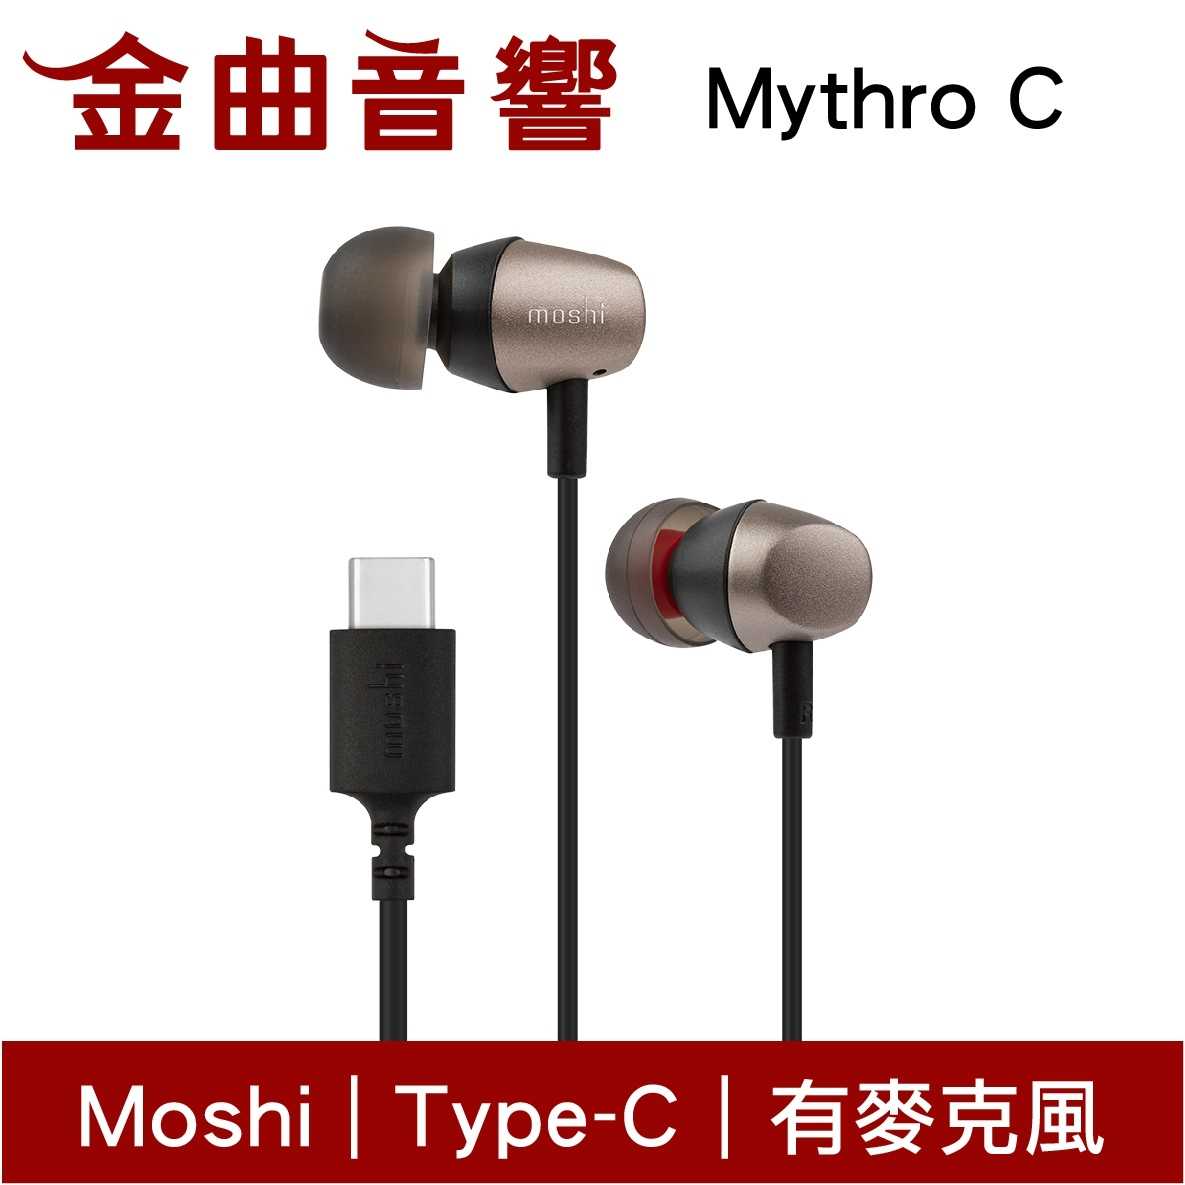 Moshi Mythro C USB Type-C 兩色可選 耳機 麥克風耳機 | 金曲音響